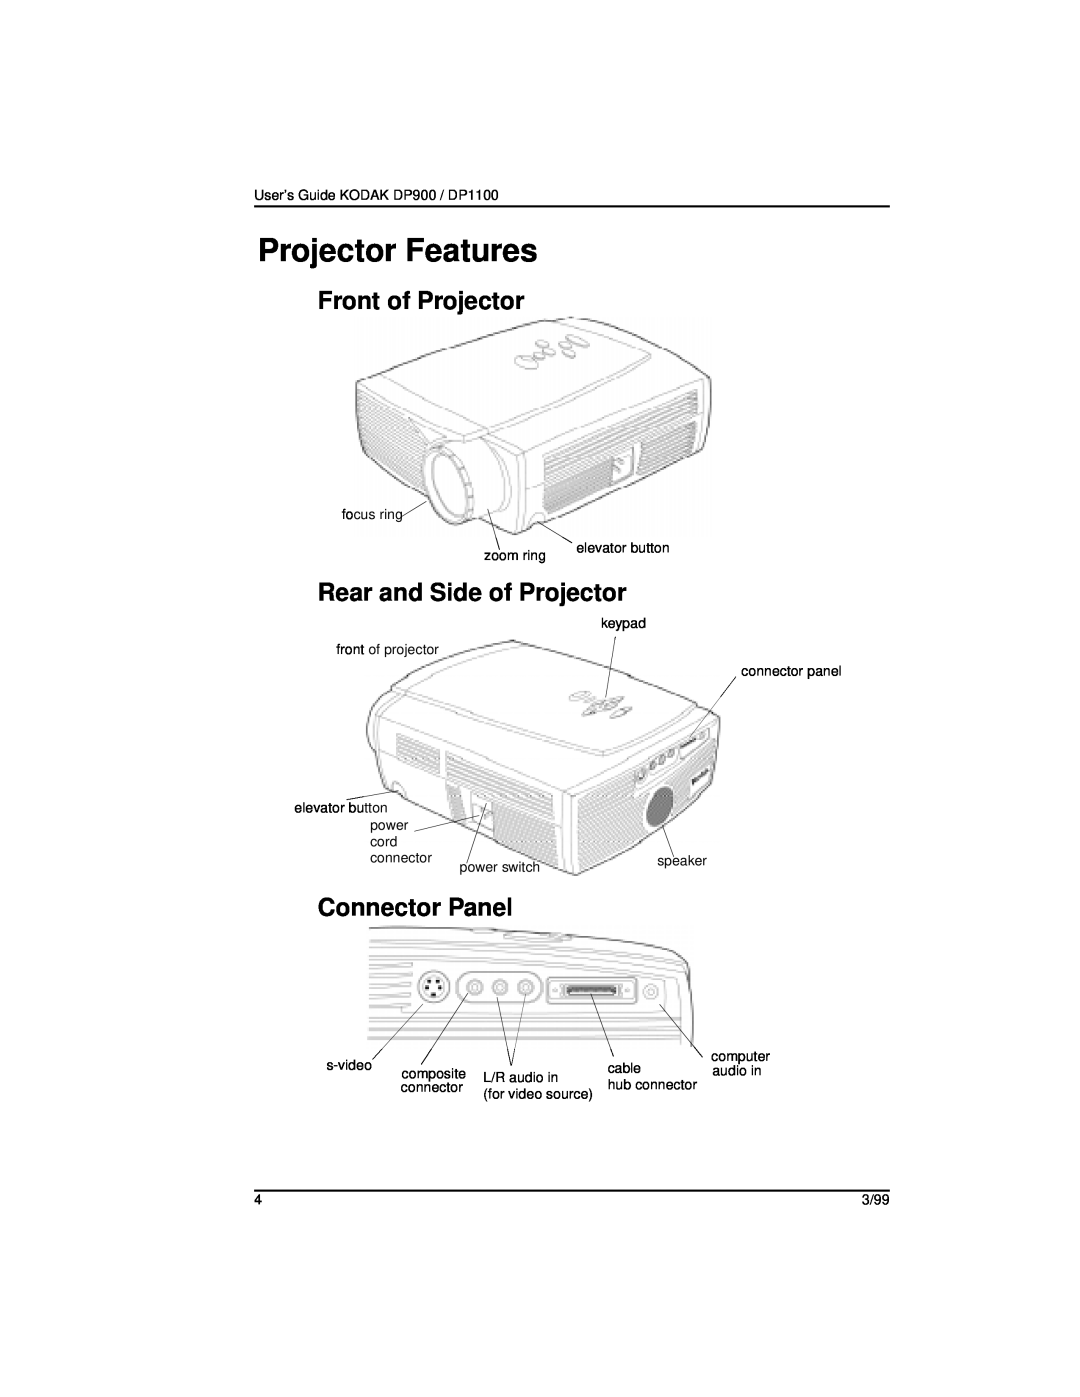 Kodak DP900, DP1100 manual Projector Features, Front of Projector, Rear and Side of Projector, Connector Panel 